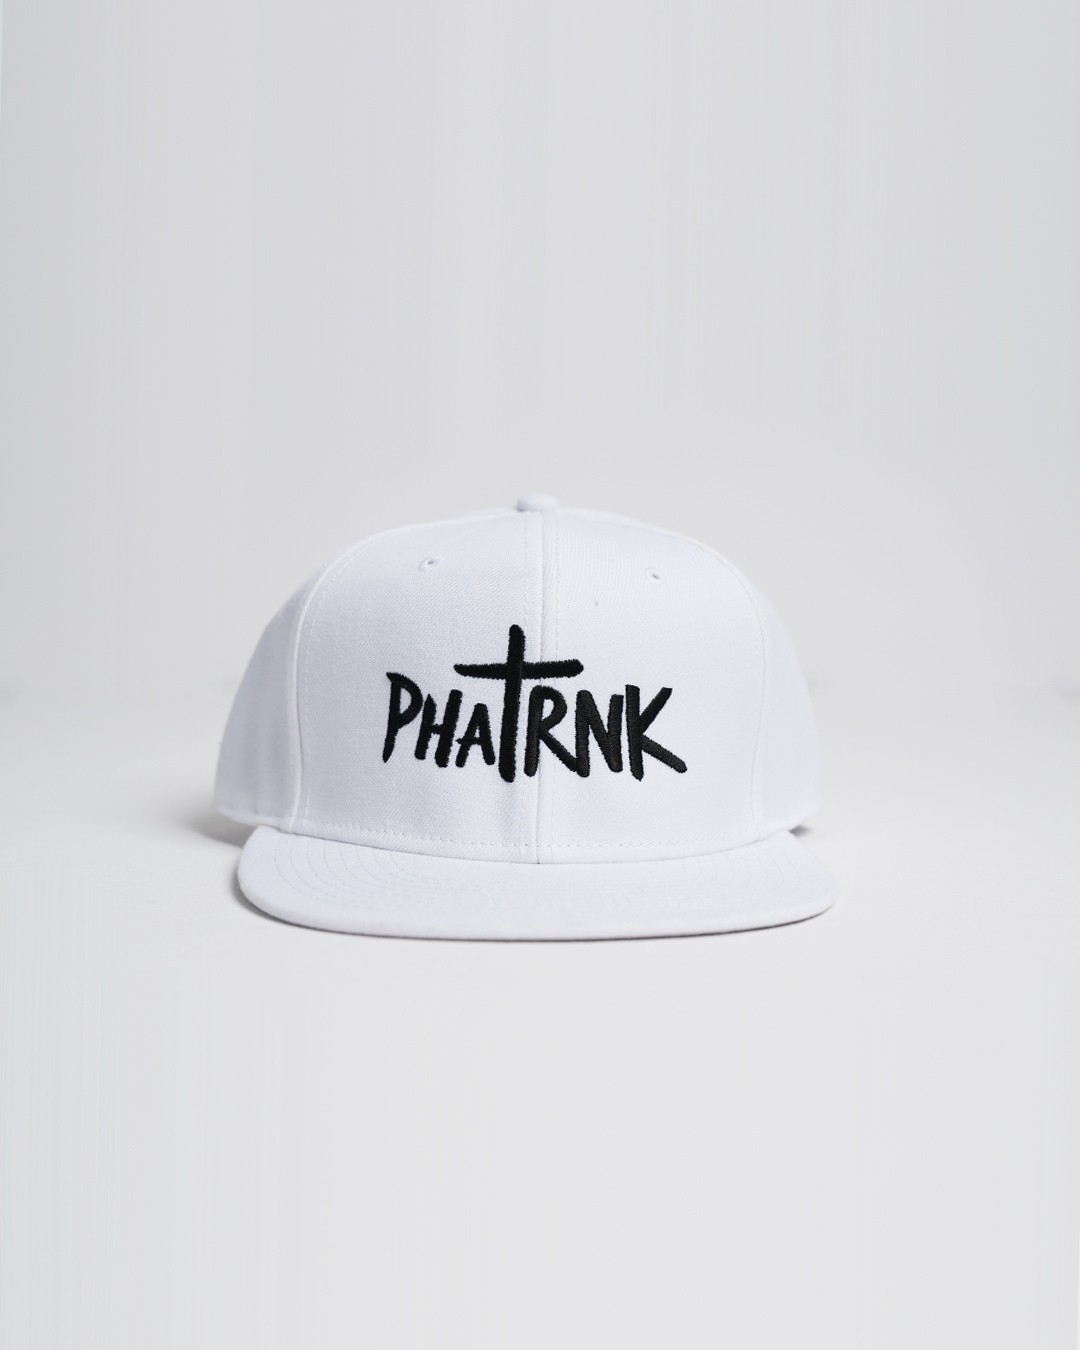 phatrnkキャップ キャップ 帽子 メンズ ファッション